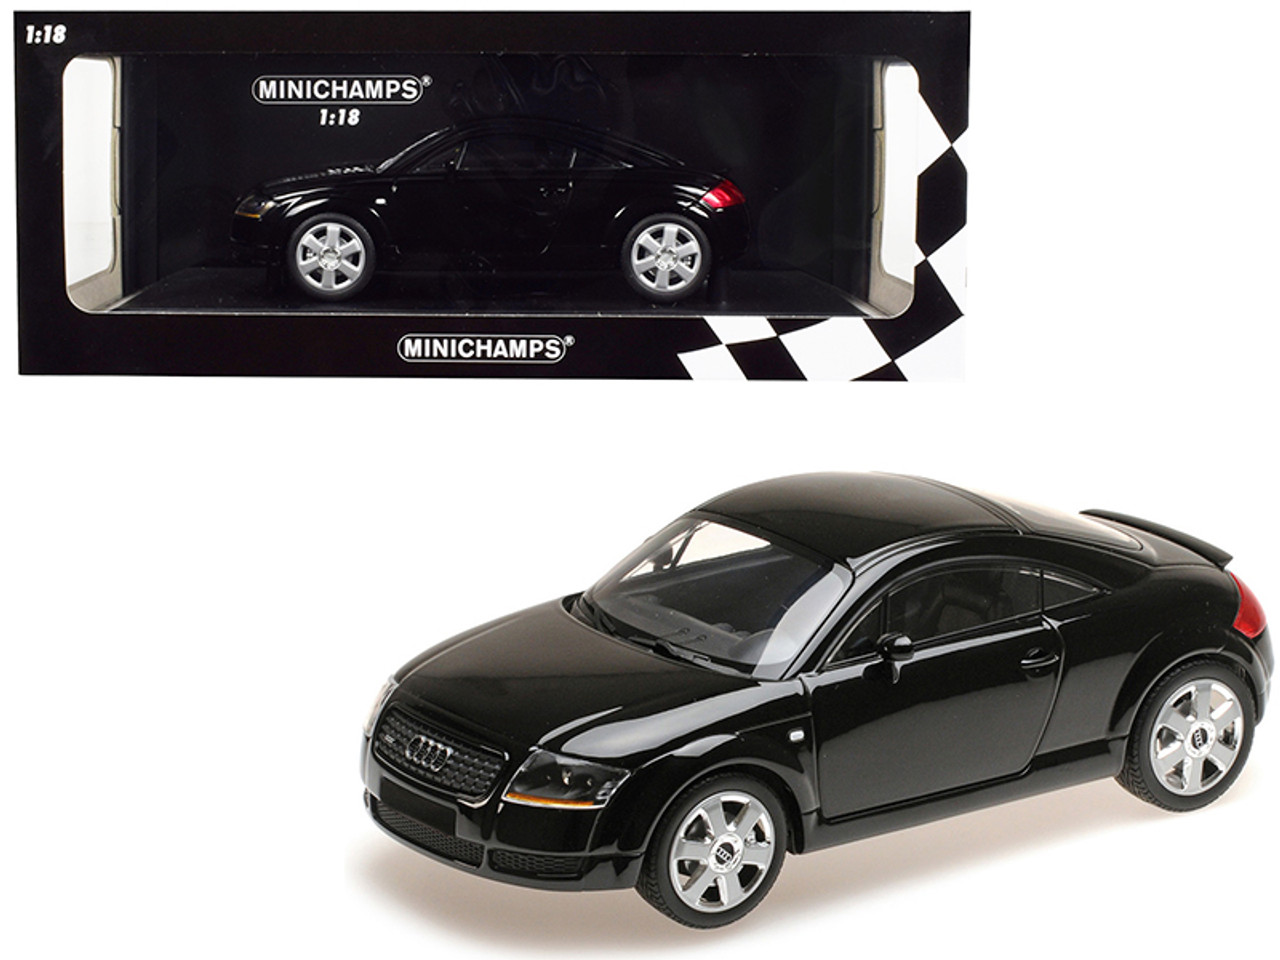 1/18 Minichamps 1998 Audi TT Coupe Black Limited Edition to 300 pieces Worldwide Diecast Car Model